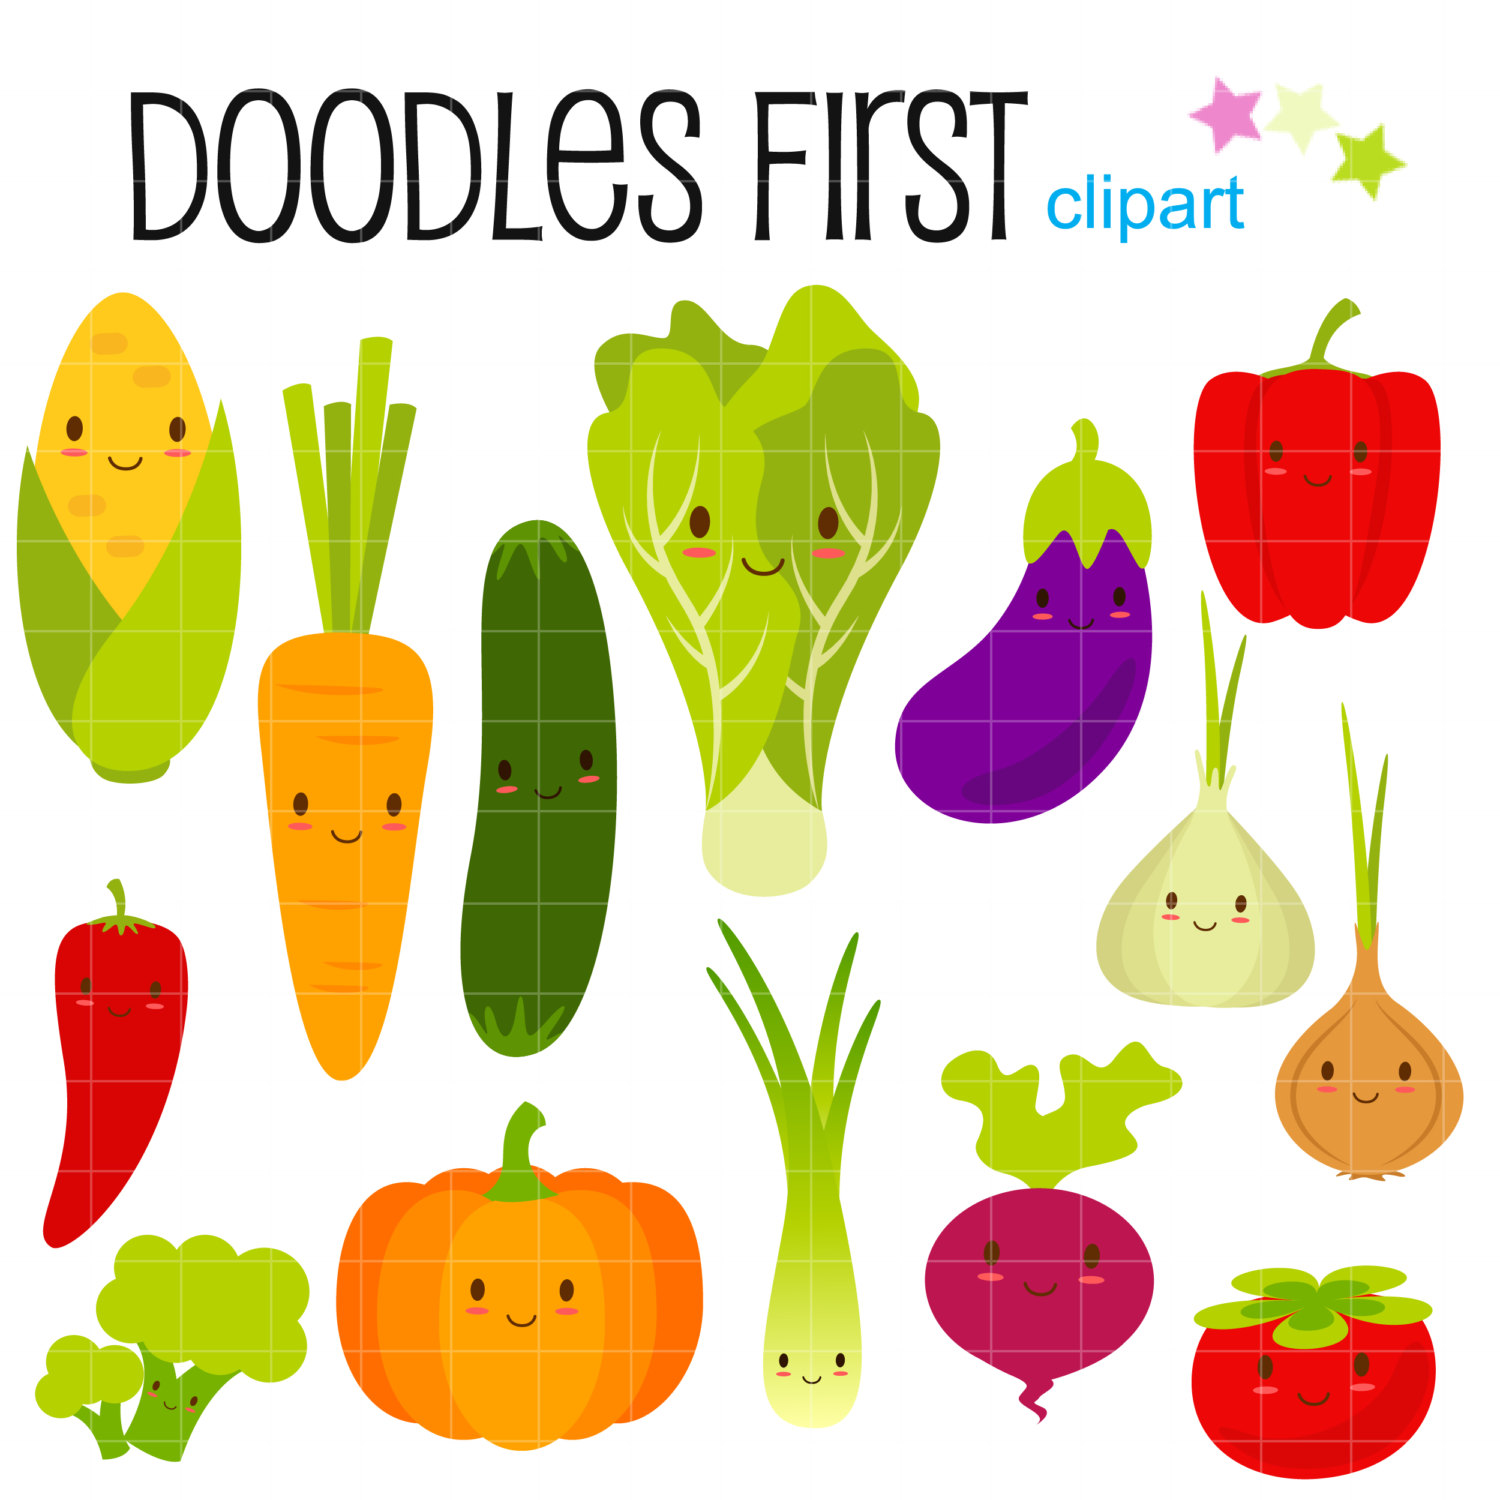 Veggies clipart. Happy cute vegetables digital